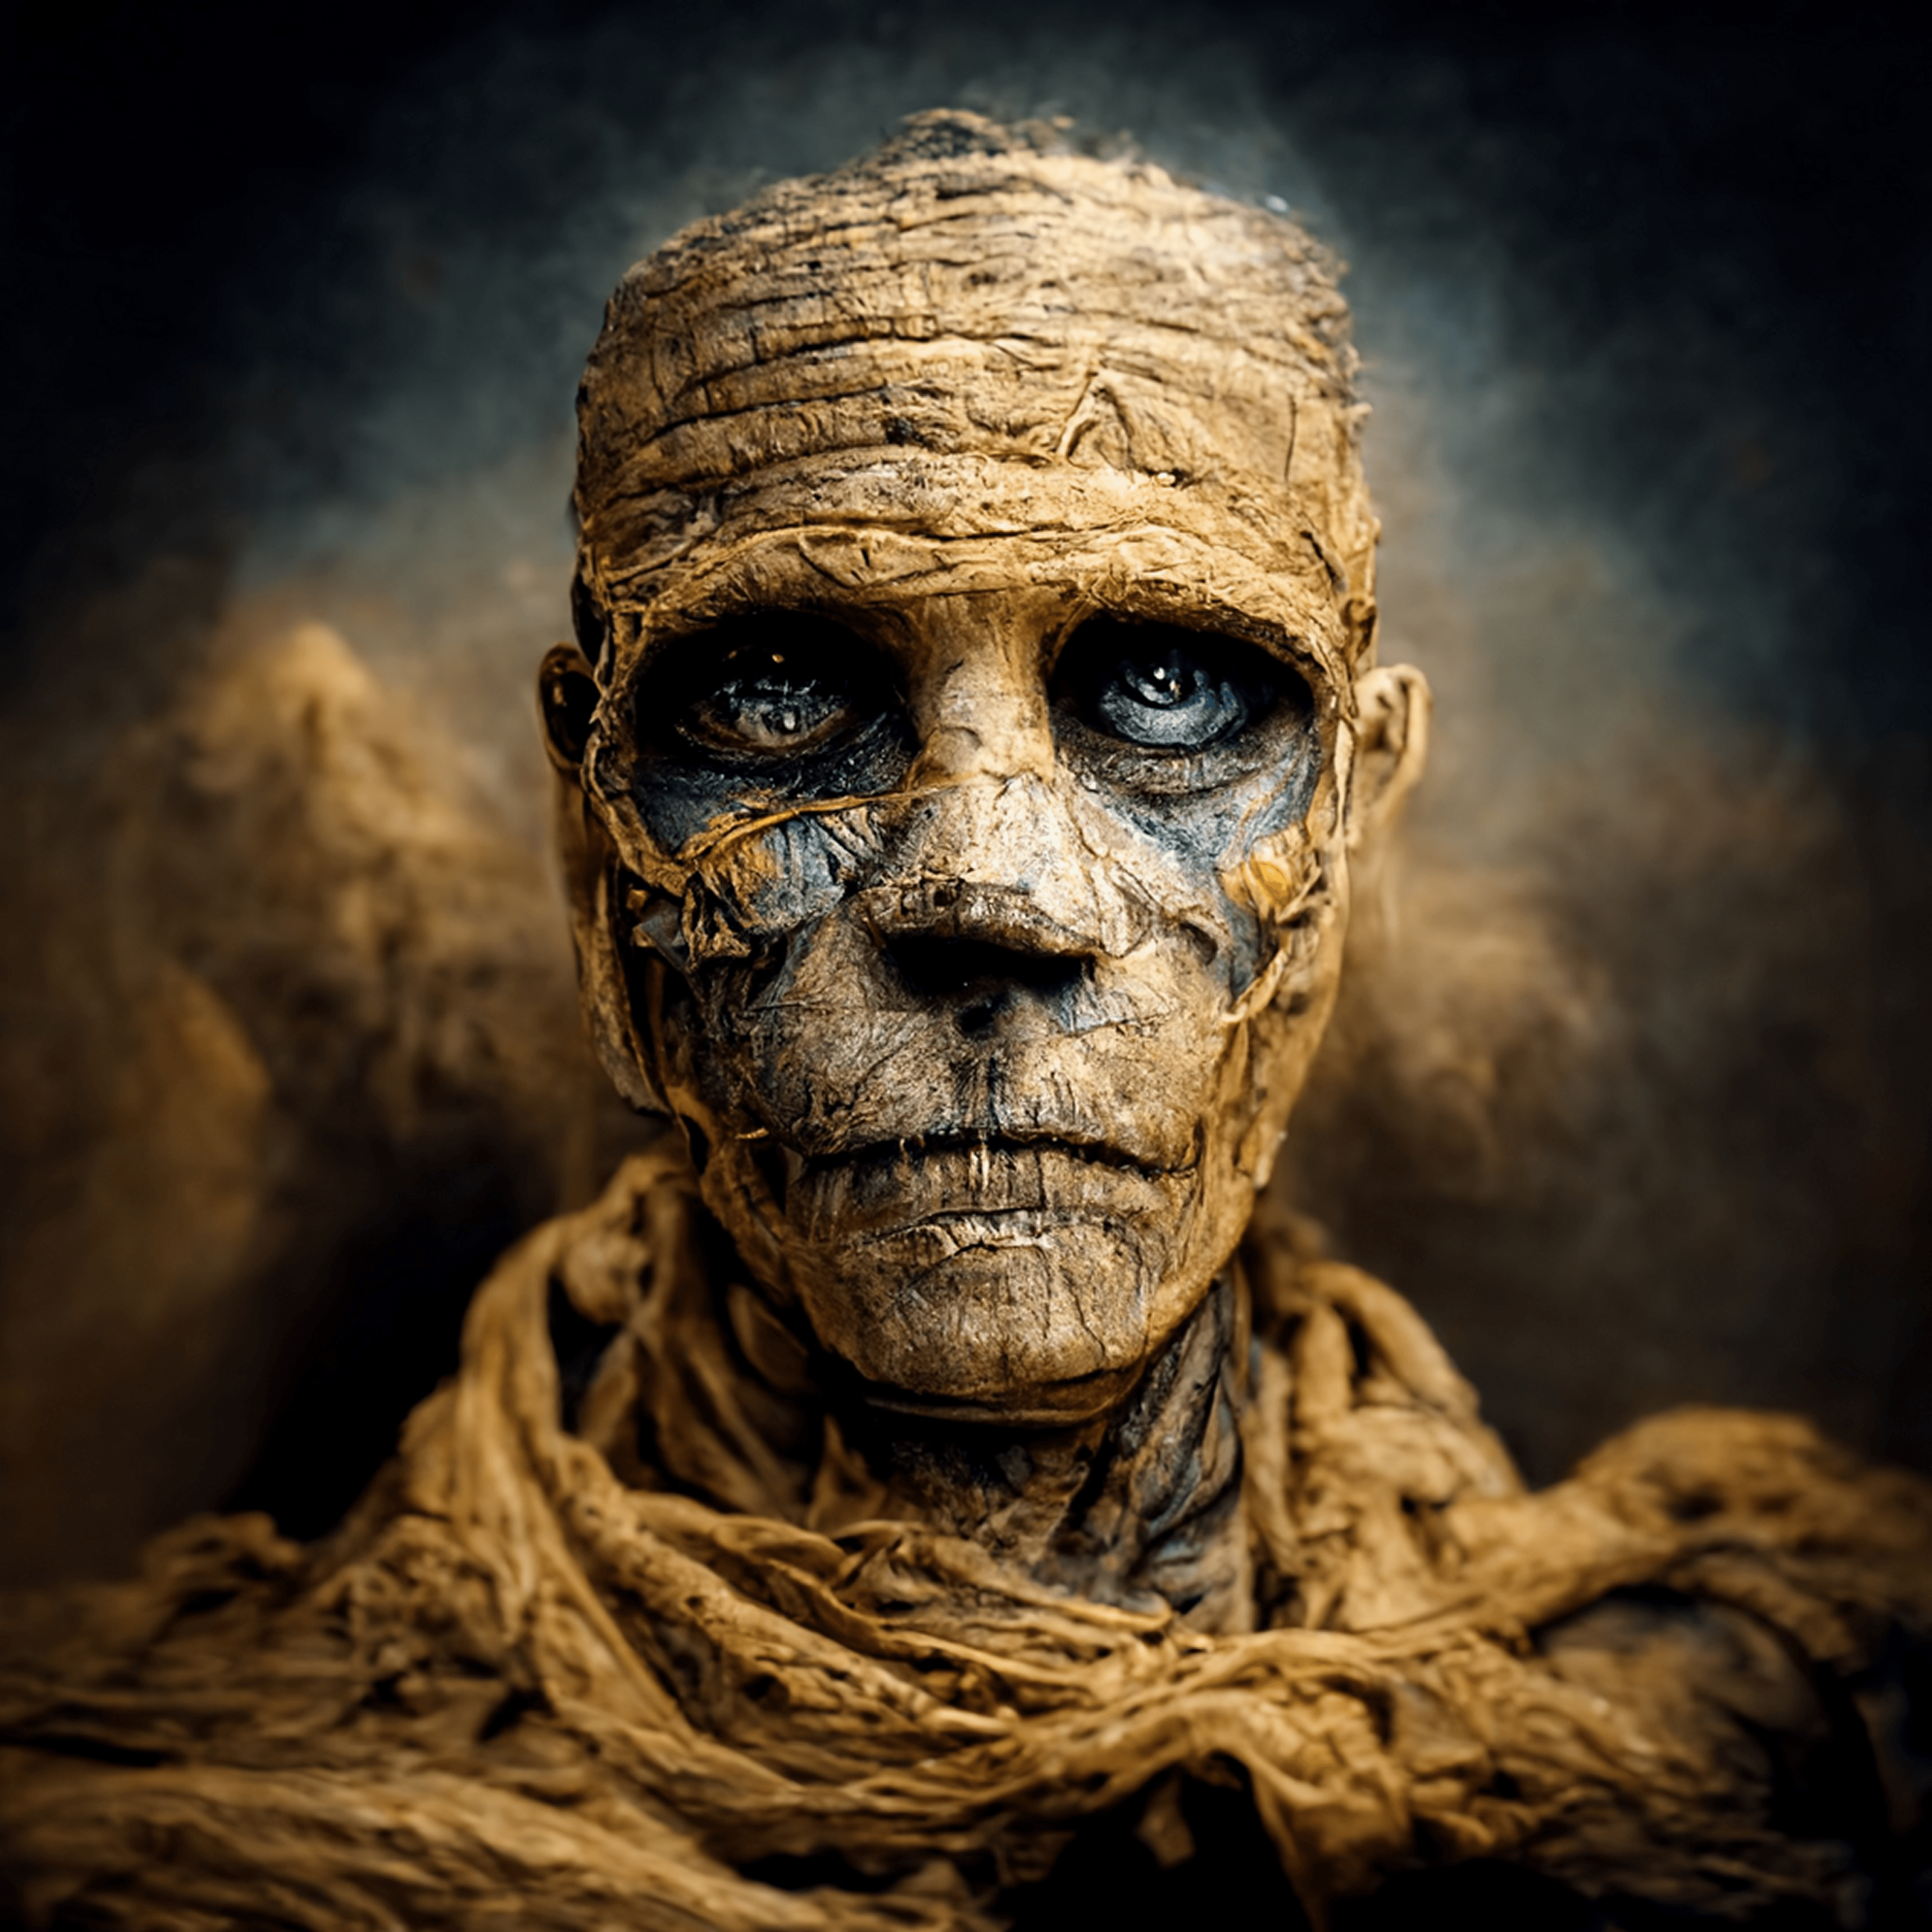 The Mummy Dark Art NFT by Sollog 1/1